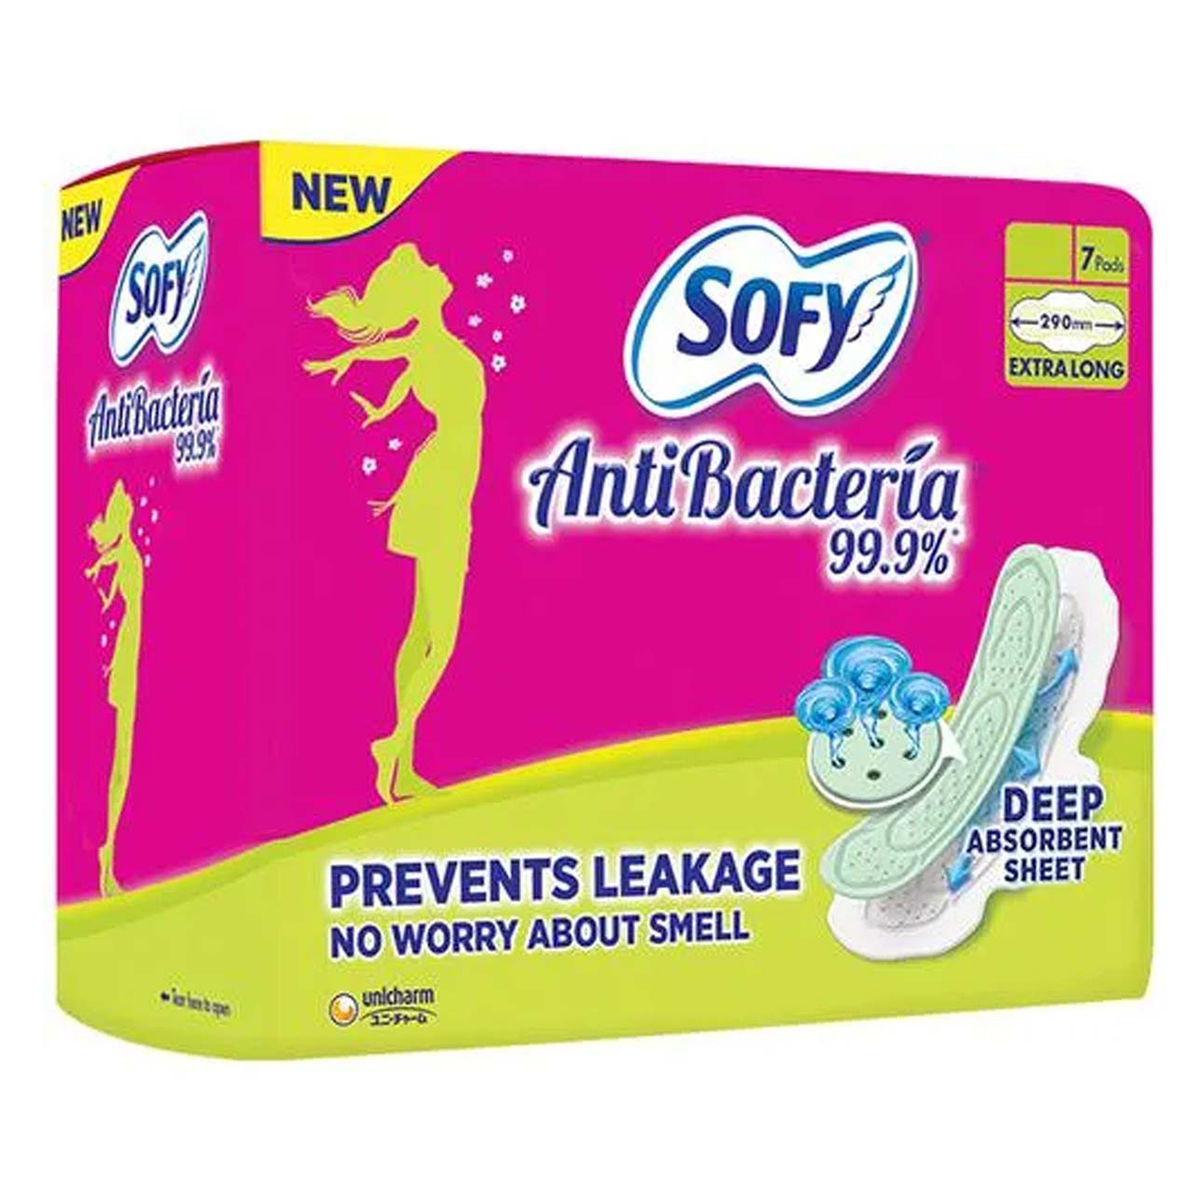 Buy Sofy Bodyfit Antibacteria Pads Extra Long, 7 Count Online